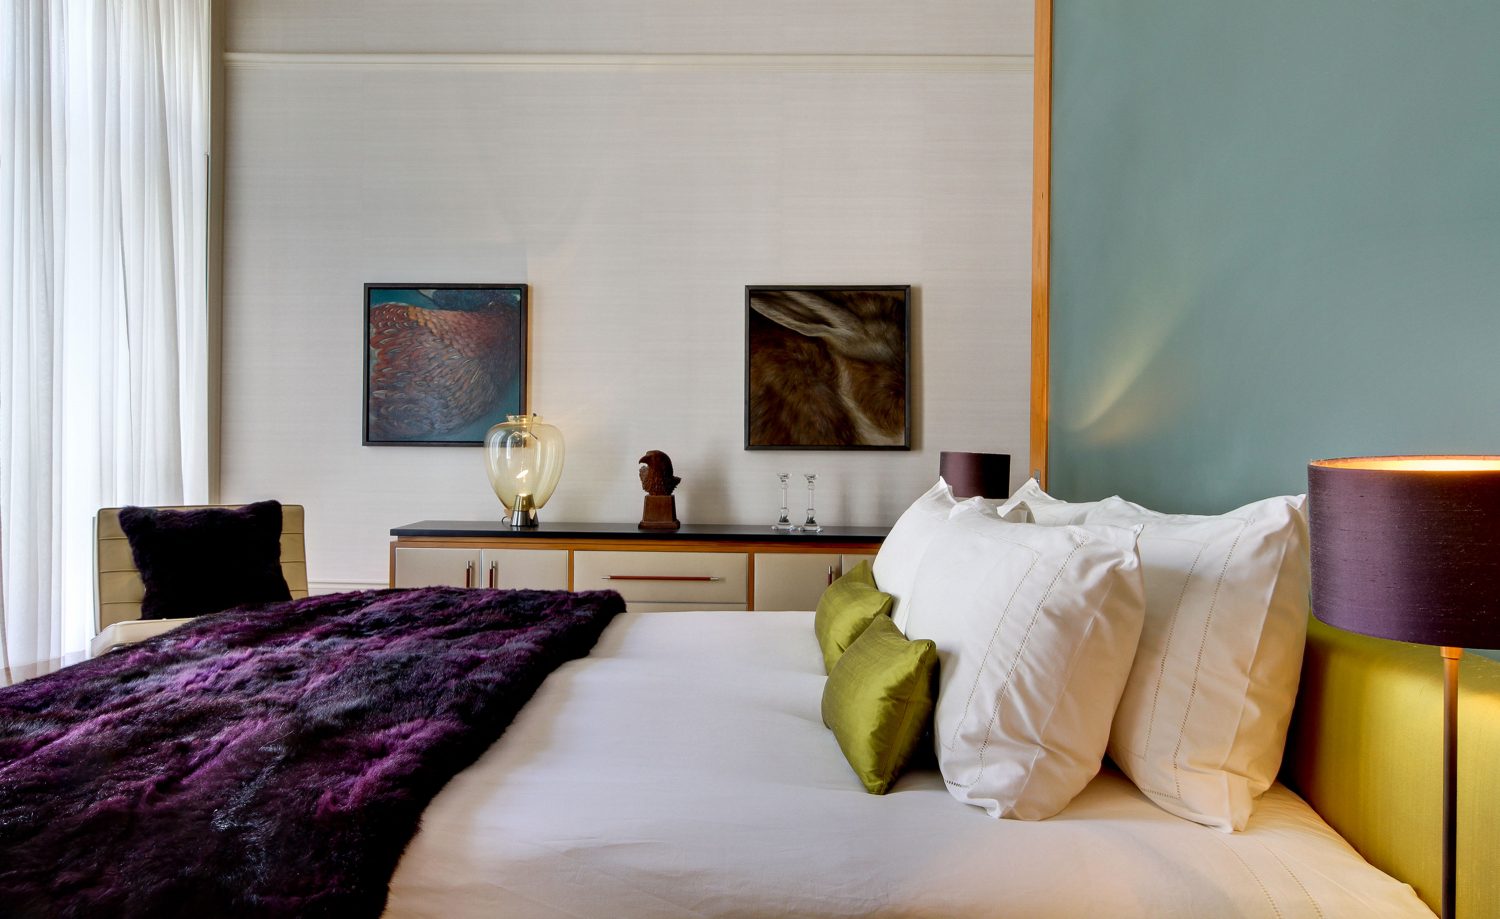 Two Grand Drawing Rooms by Daniel Hopwood - bedroom. Kensington interior design